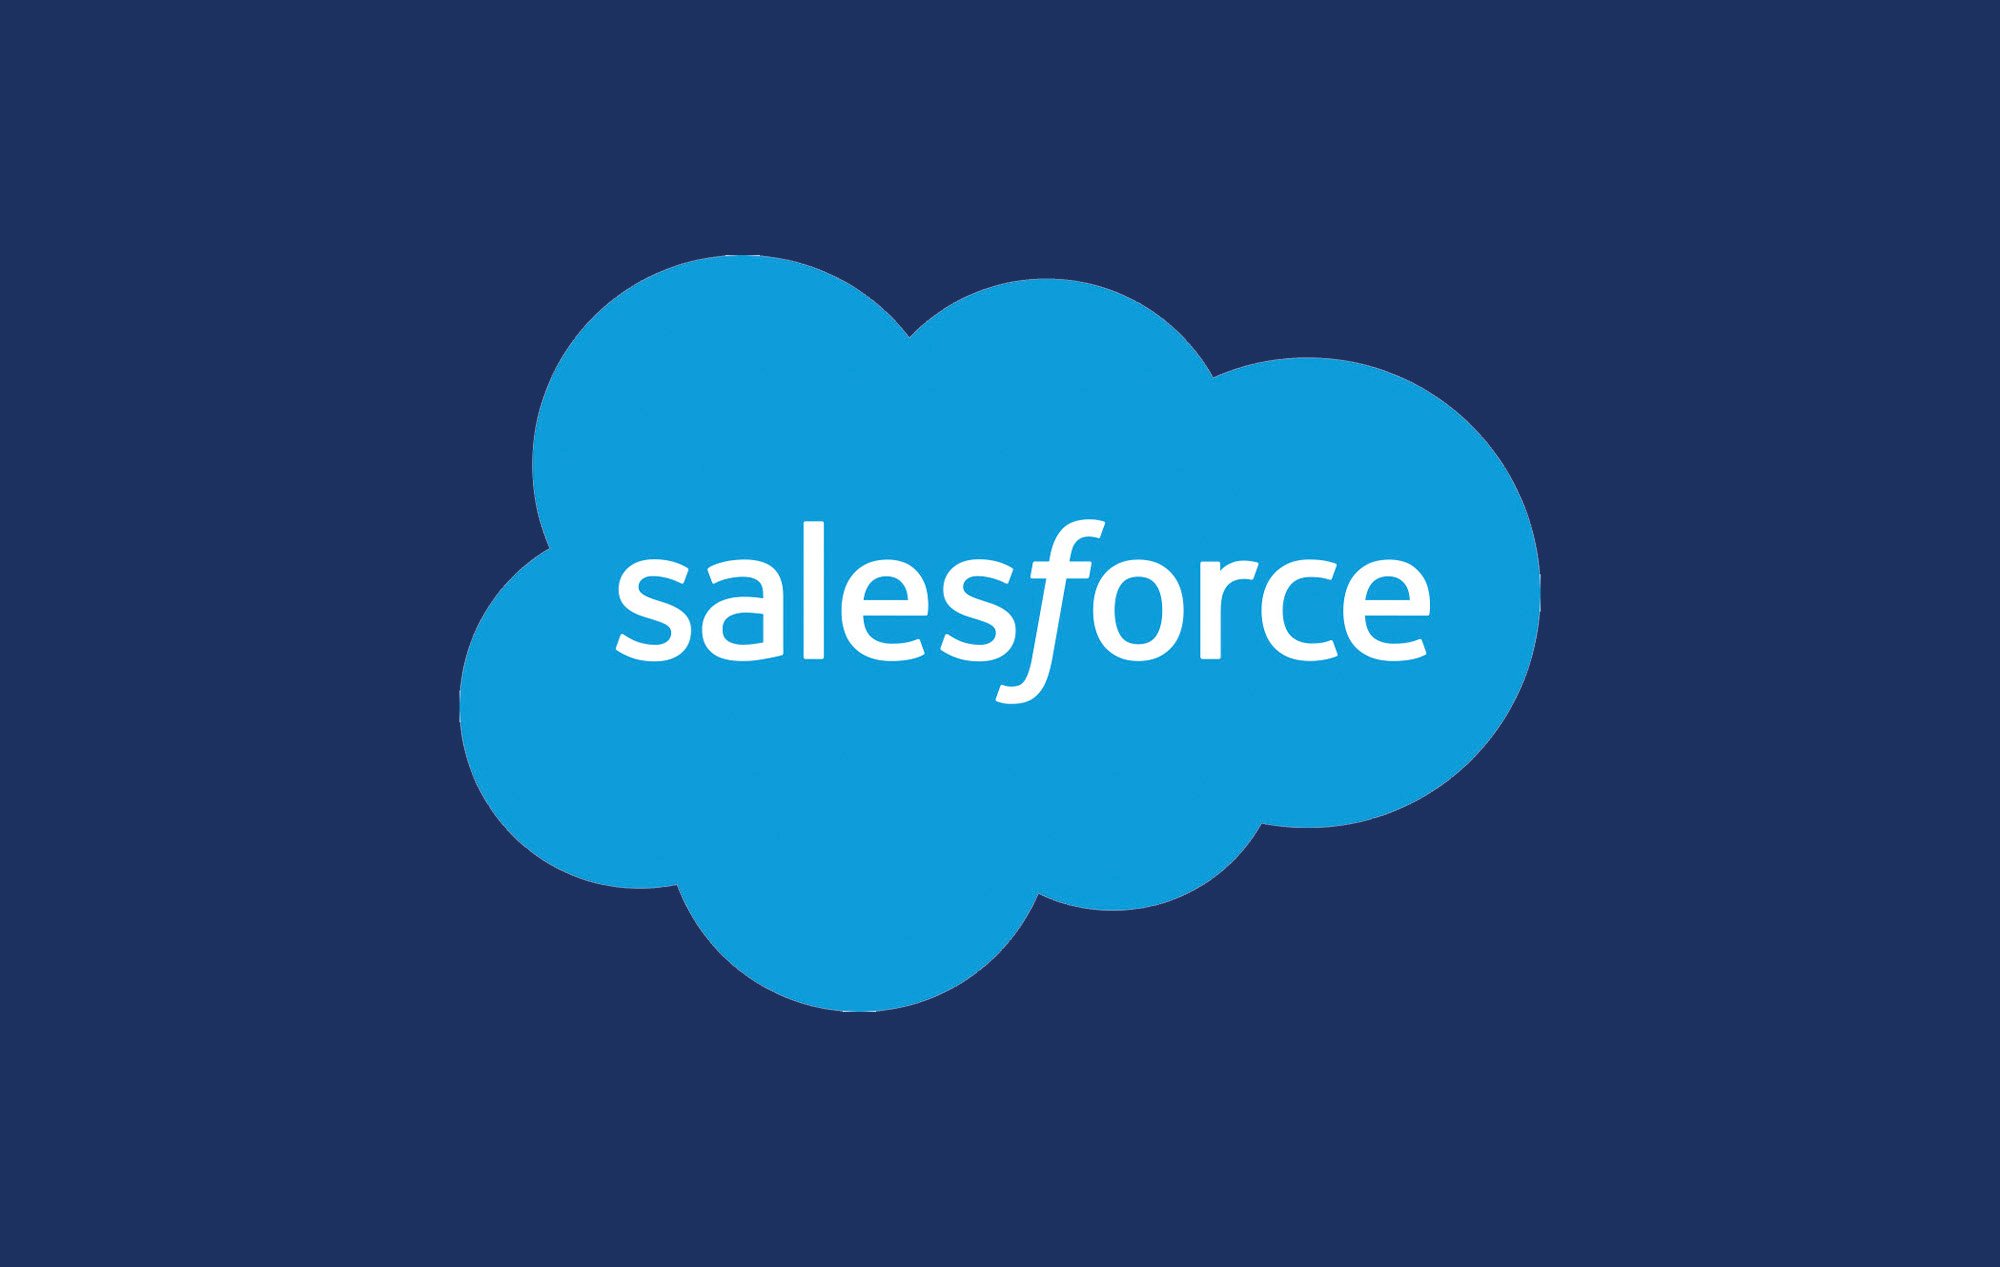 Salesforce logo on navy background.